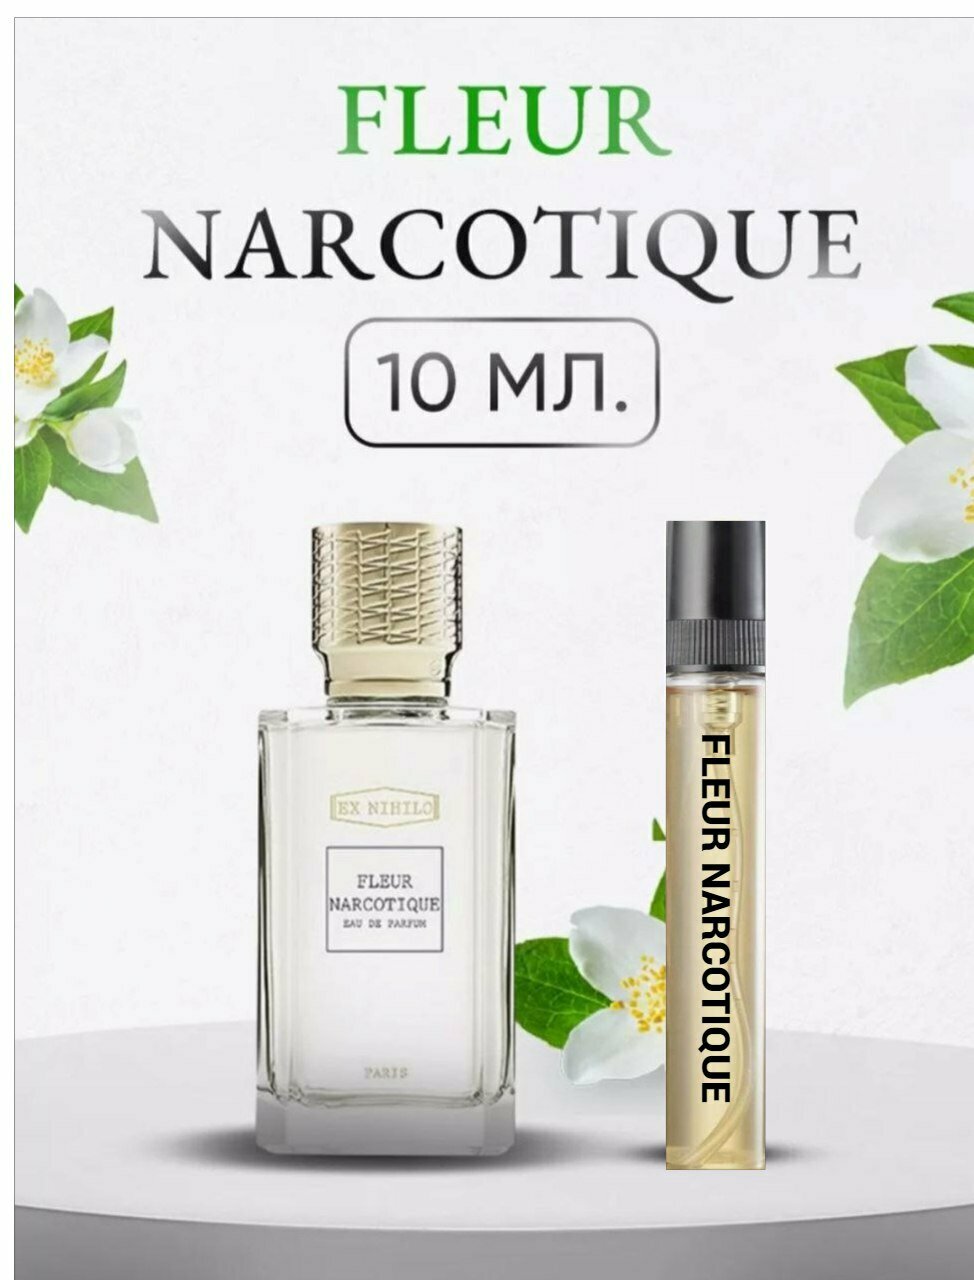 "Fleur narcotigue" - масляные духи, которые покорят ваше сердце 10 мл